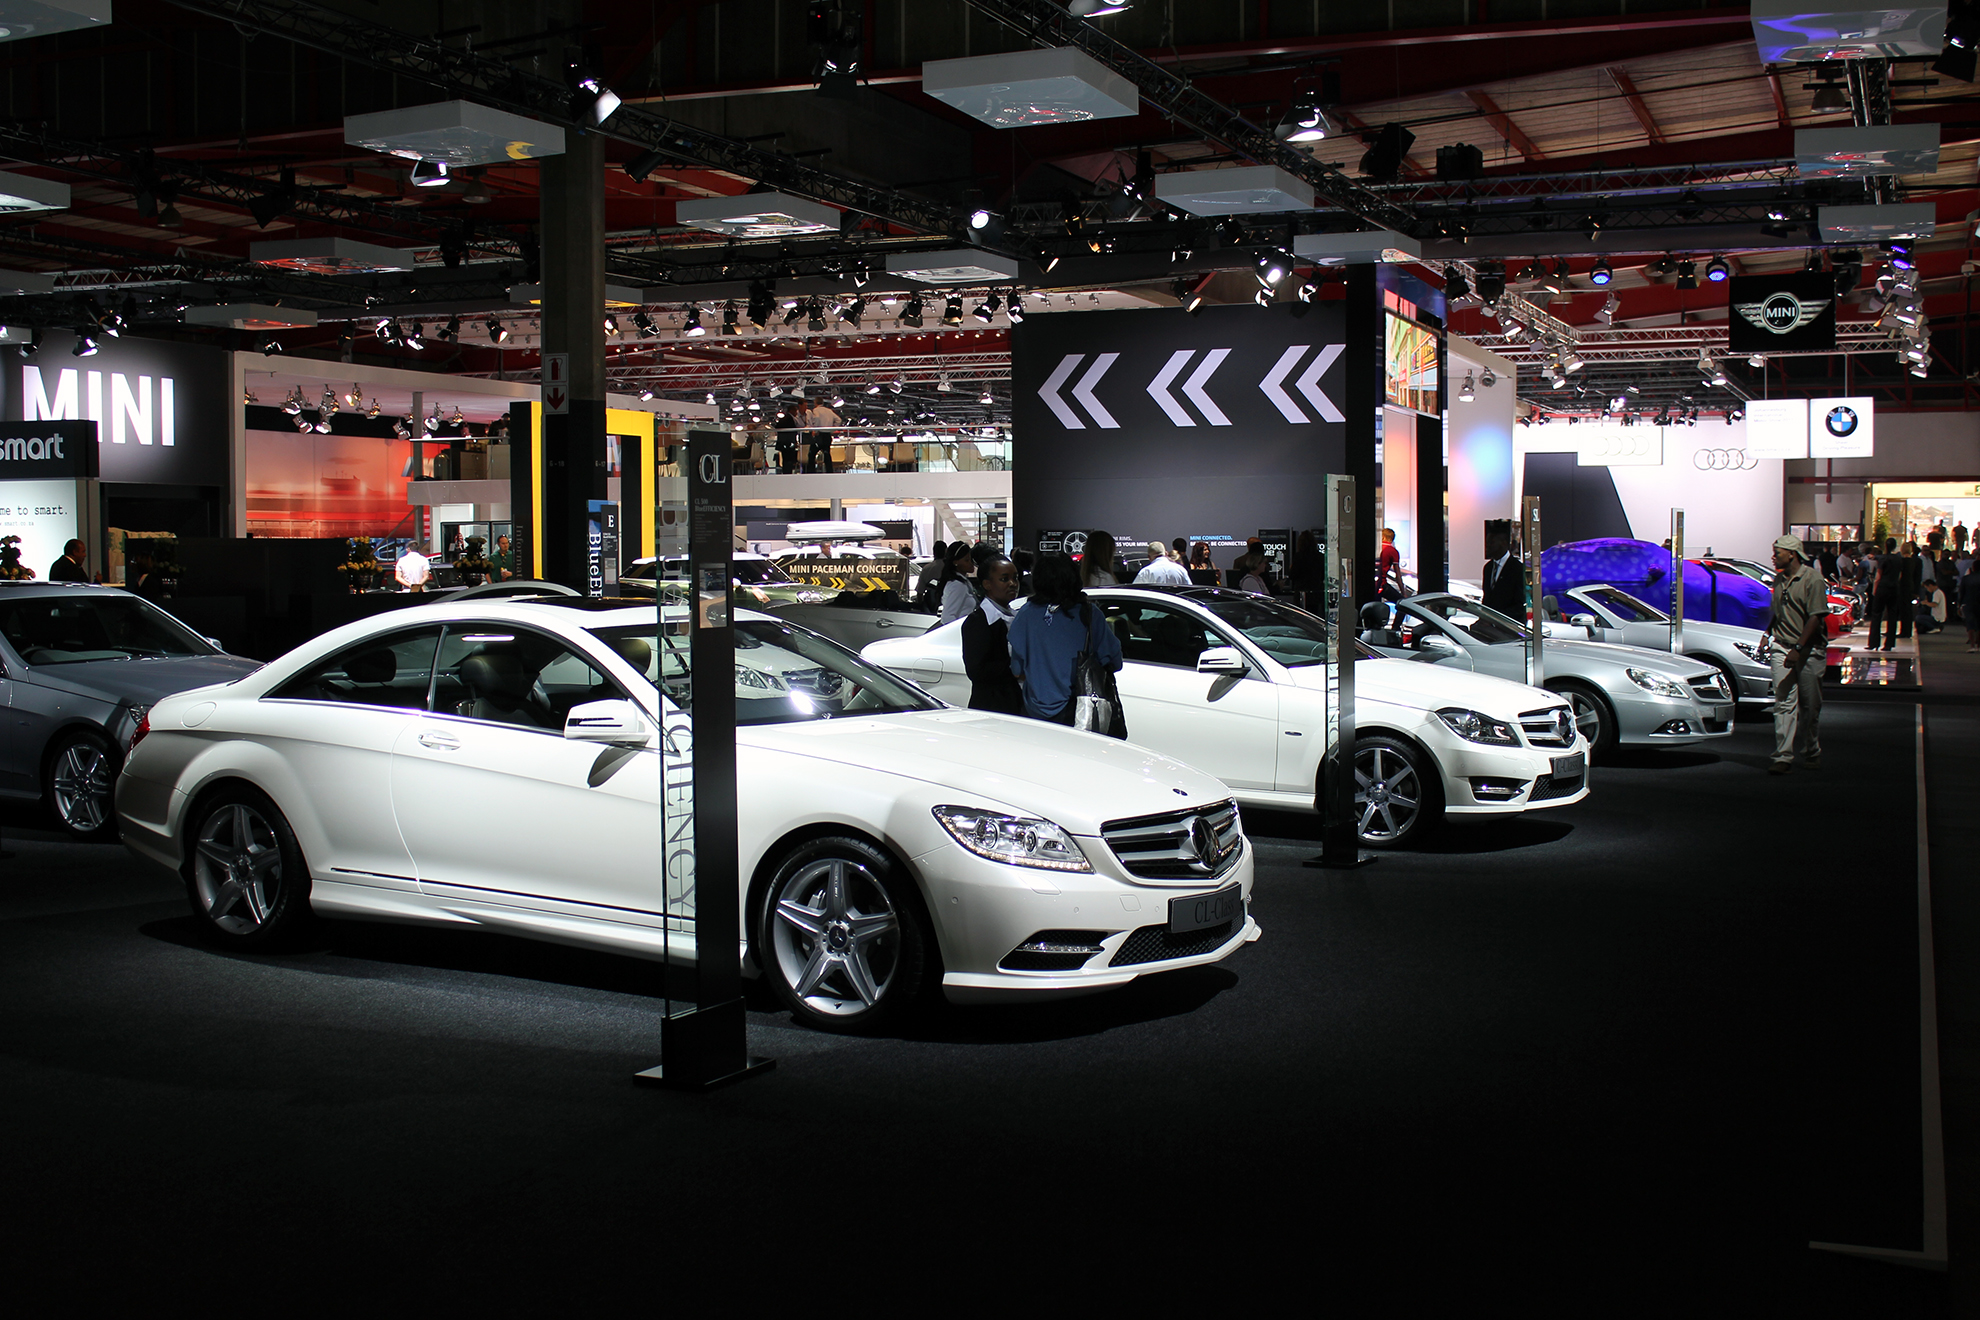 Johannesburg Motor Show 2013 – Virtual Reality 360 Degree Video